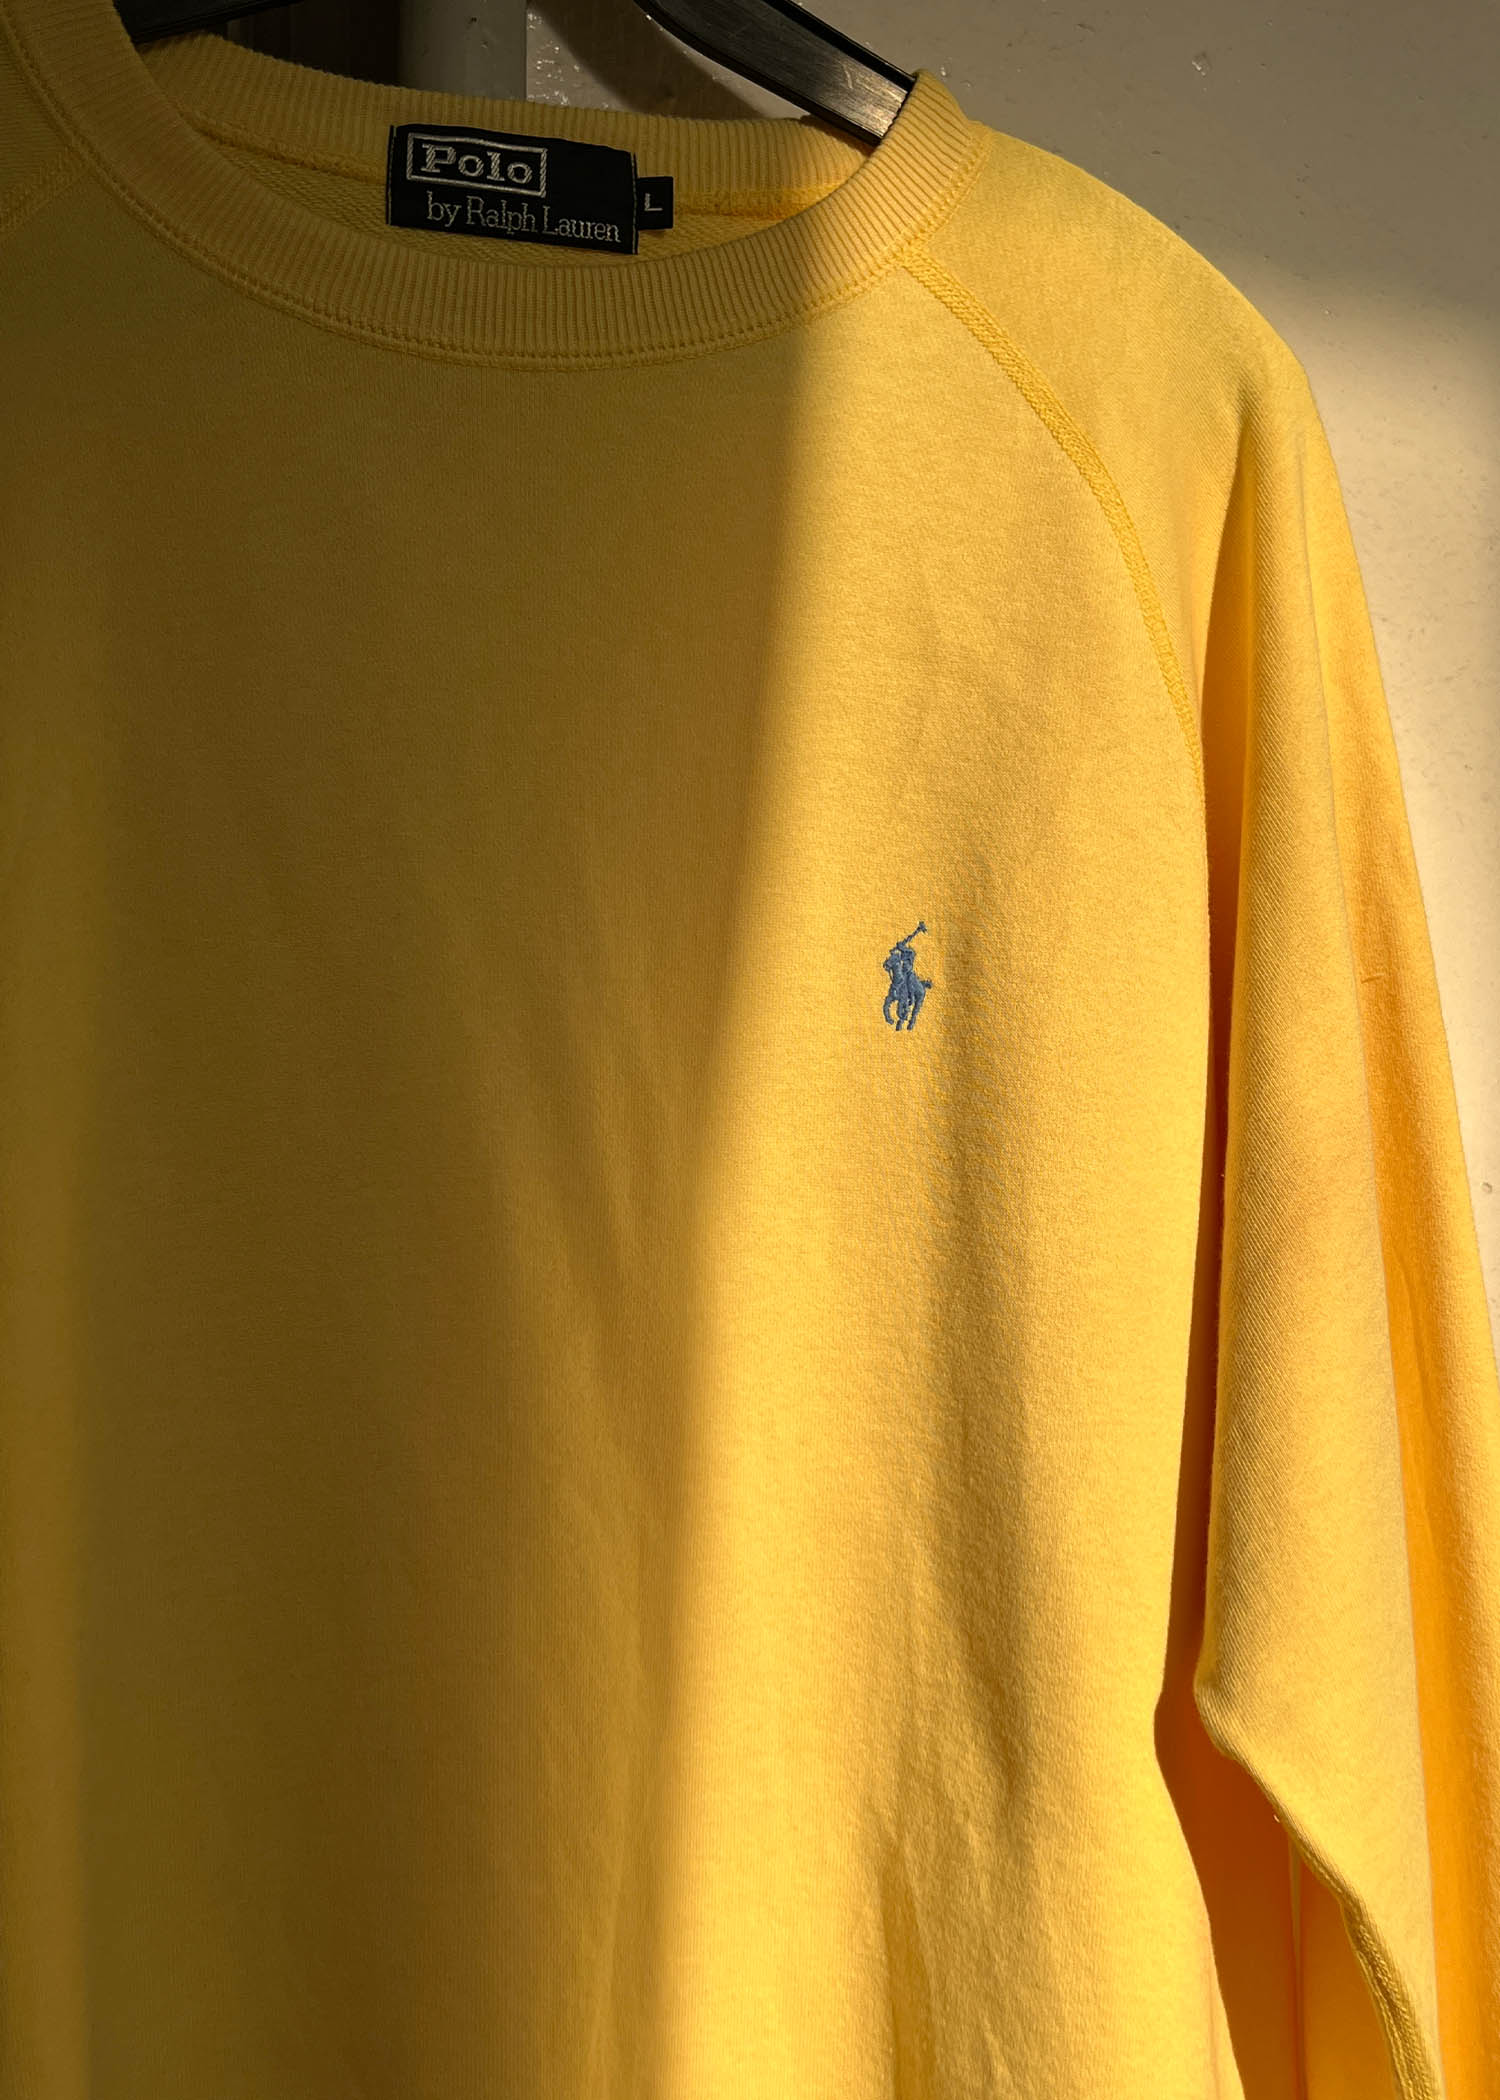 Polo by Ralph Lauren sweatshirts